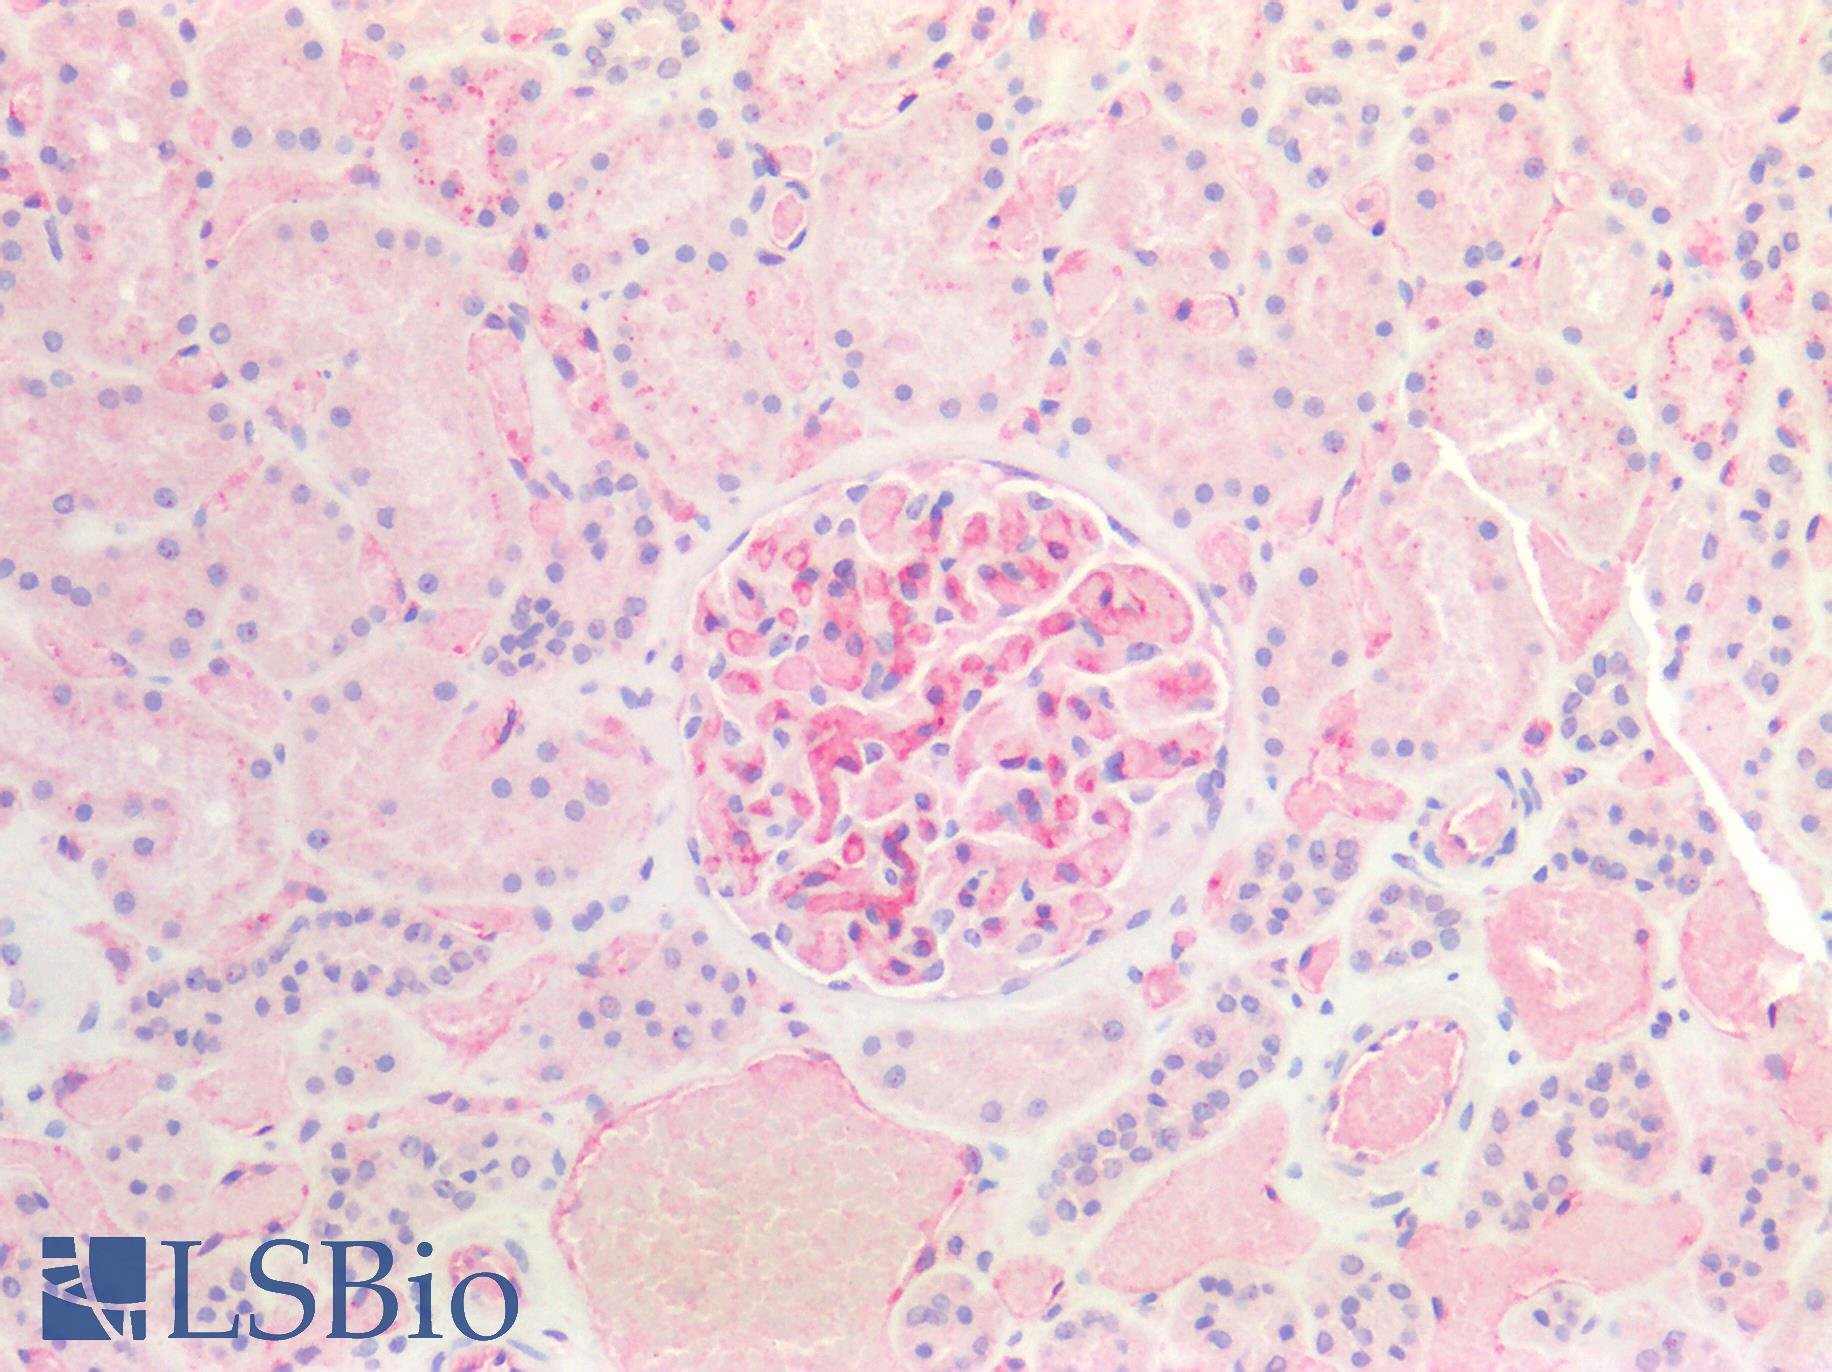 B2M / Beta 2 Microglobulin Antibody - Human Kidney: Formalin-Fixed, Paraffin-Embedded (FFPE)